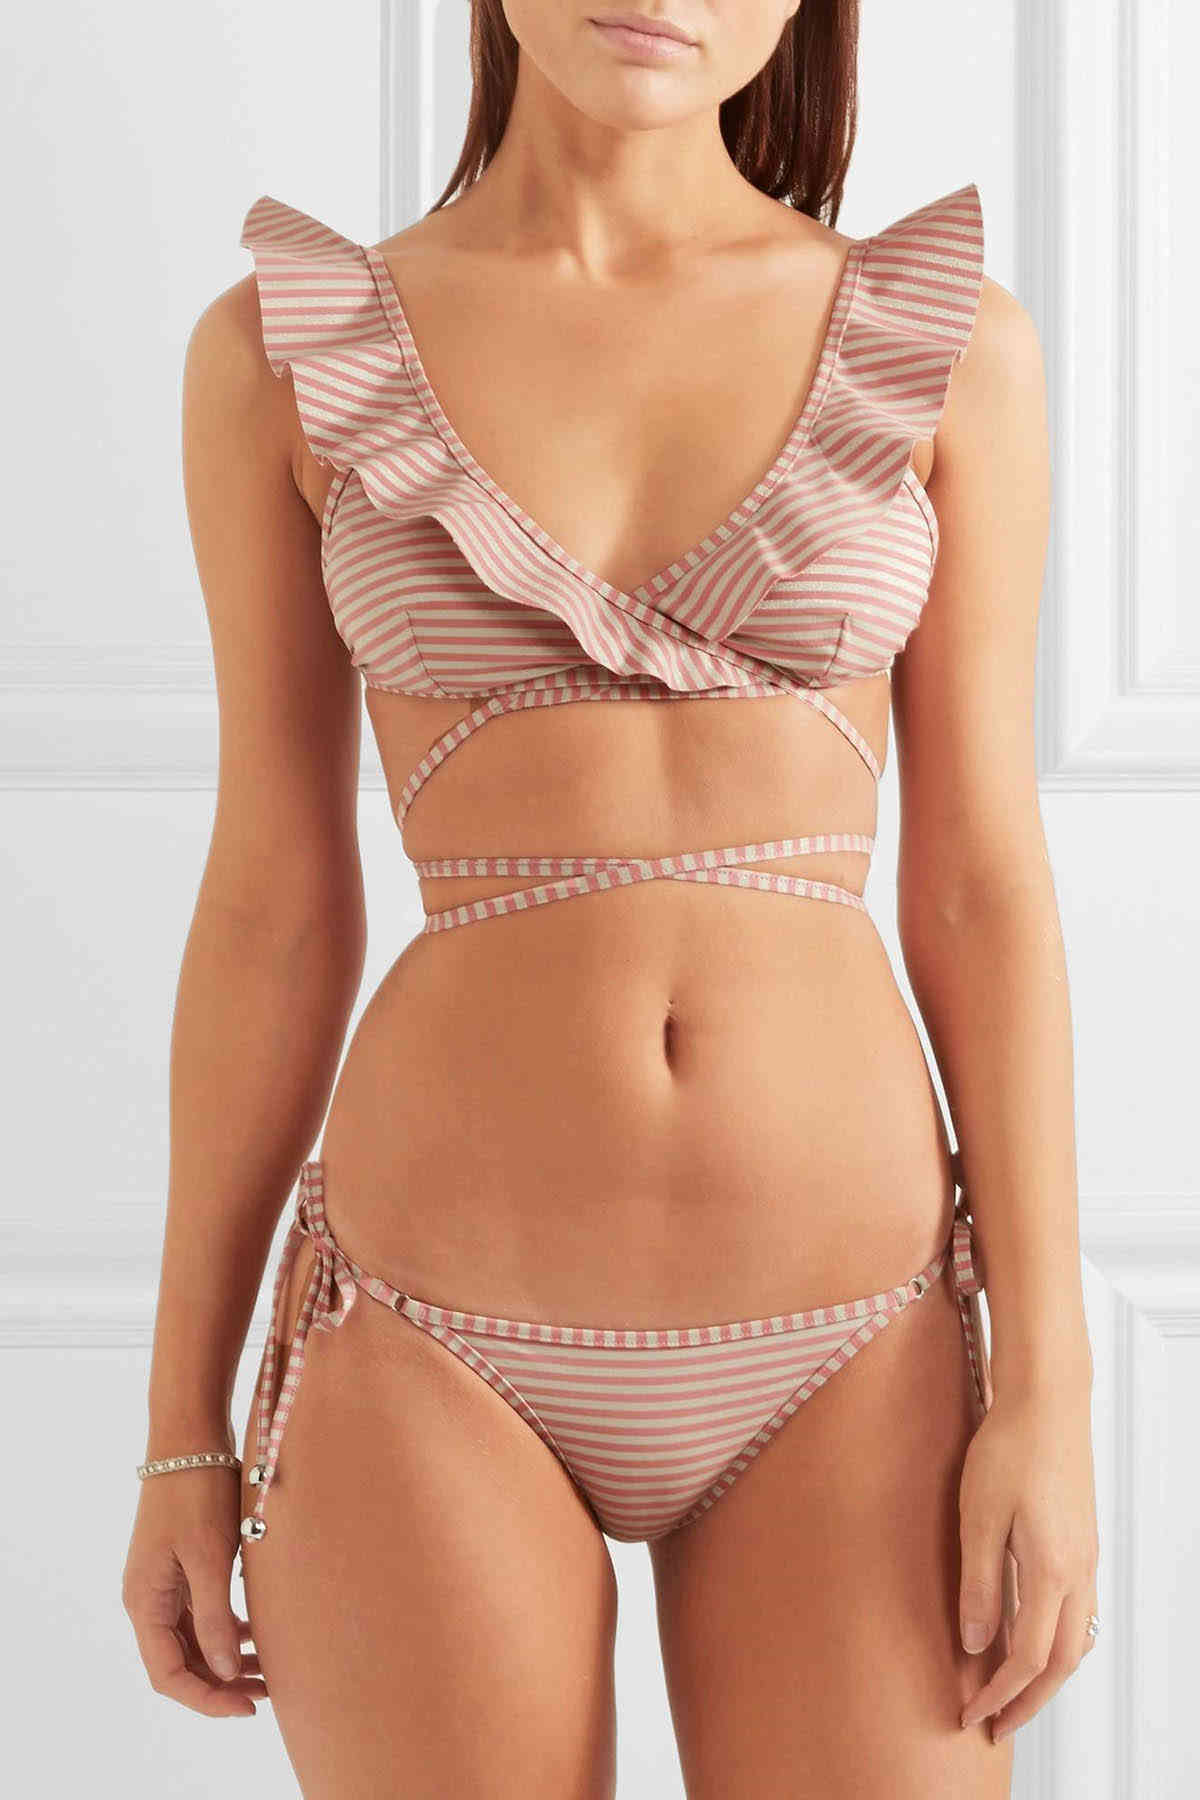 Ruffle Striped Bikini Set Women Swimwear Swimsuit